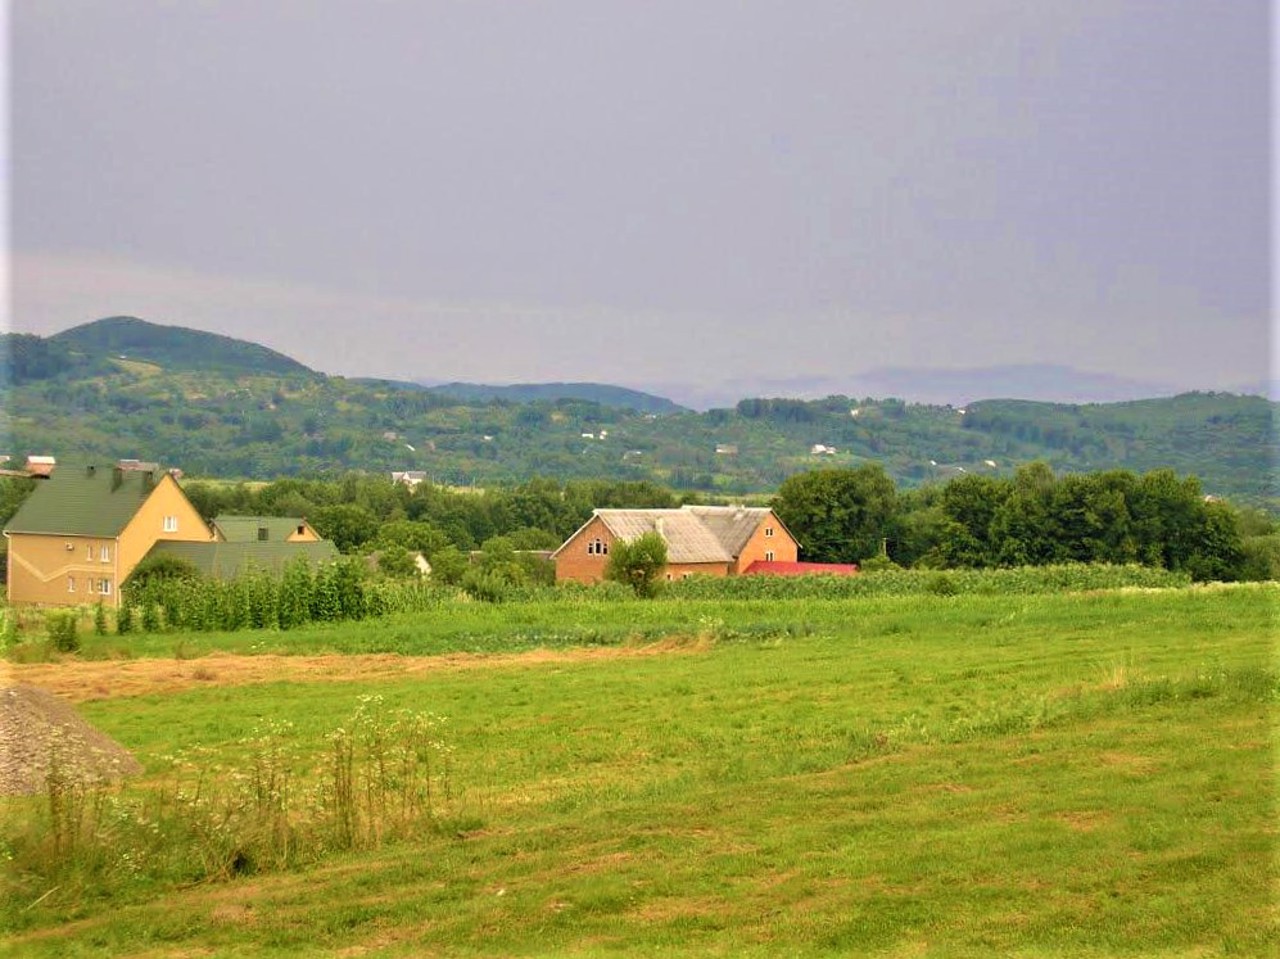 Zolotarovo village